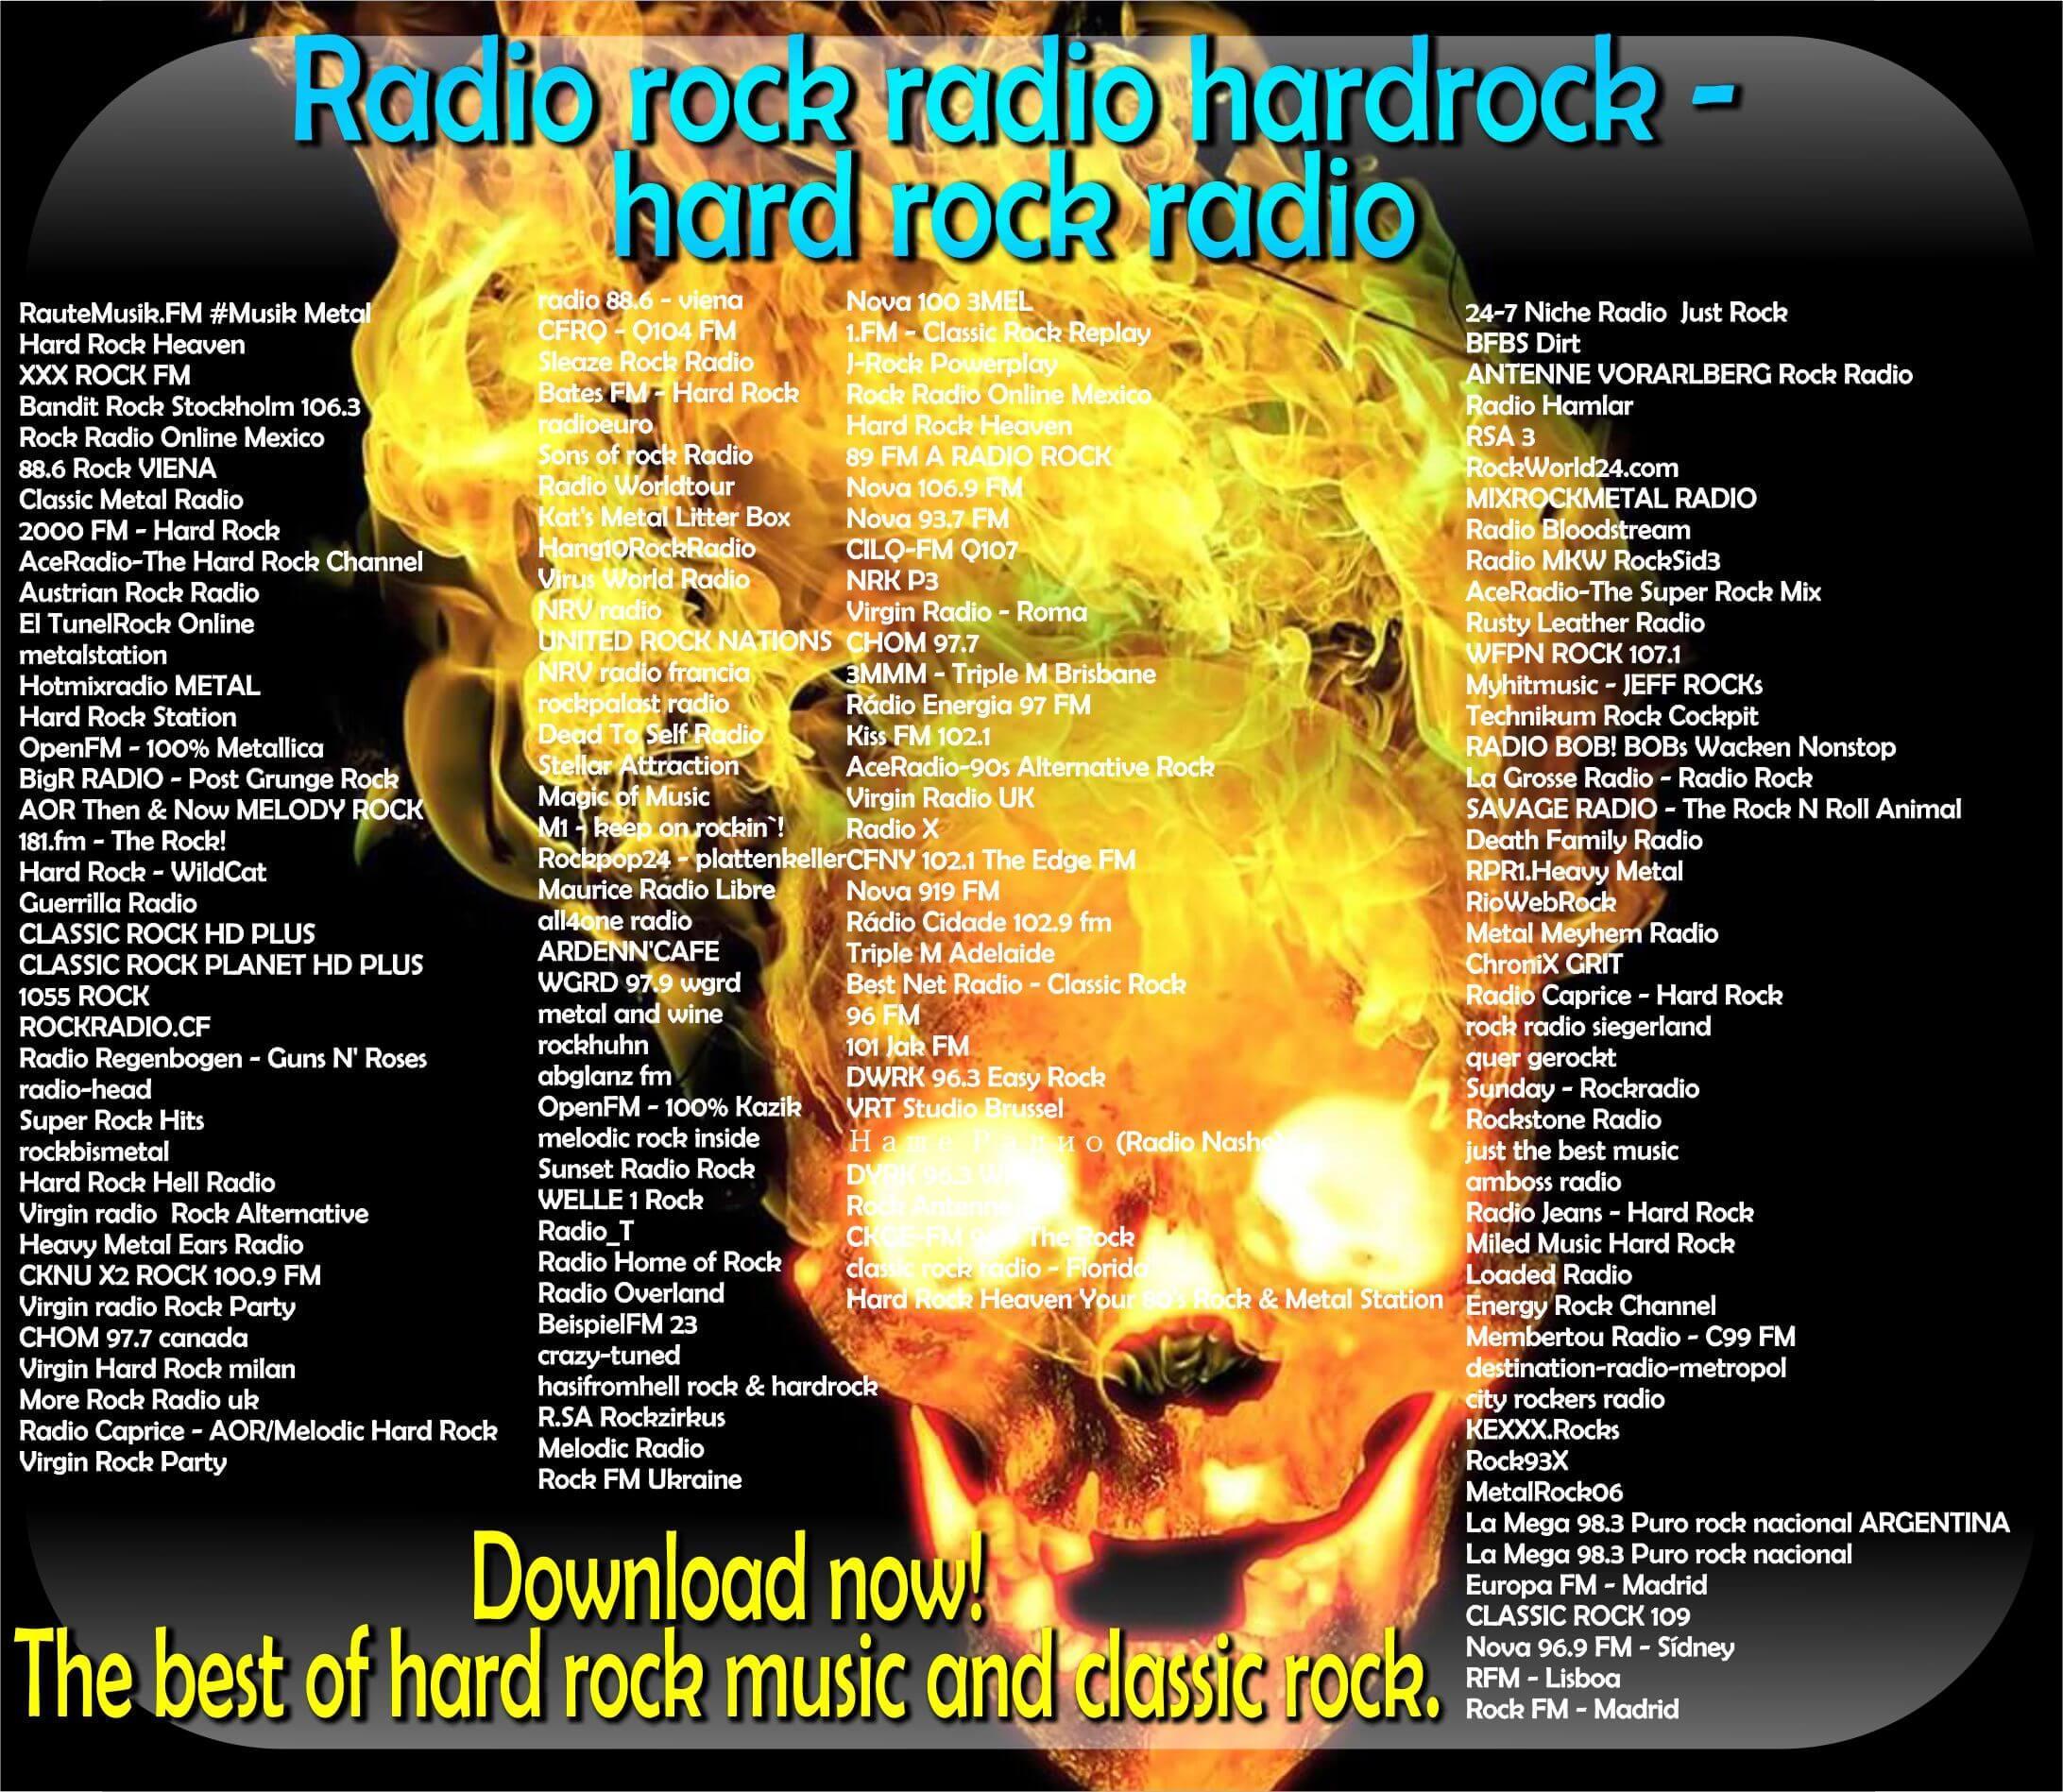 Hard rock radio rock radio hardrock fm for Android - APK Download